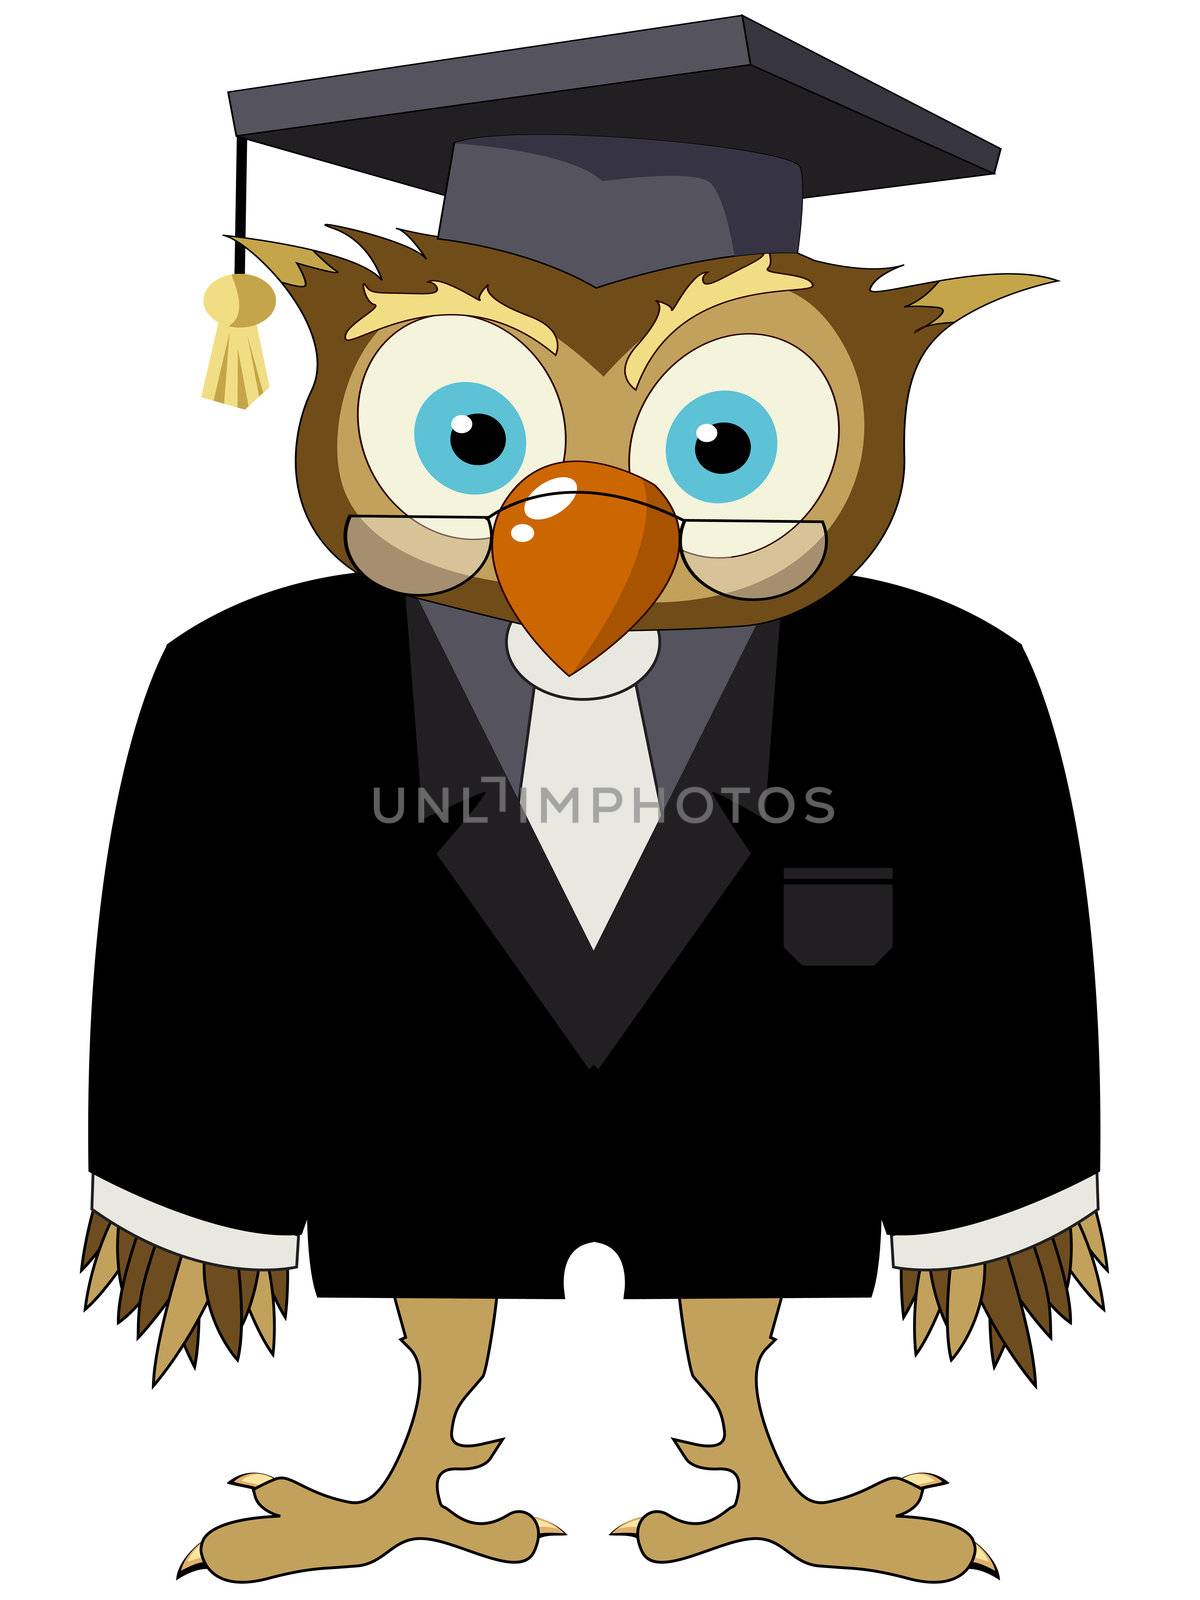 Cartoon owl by Lirch